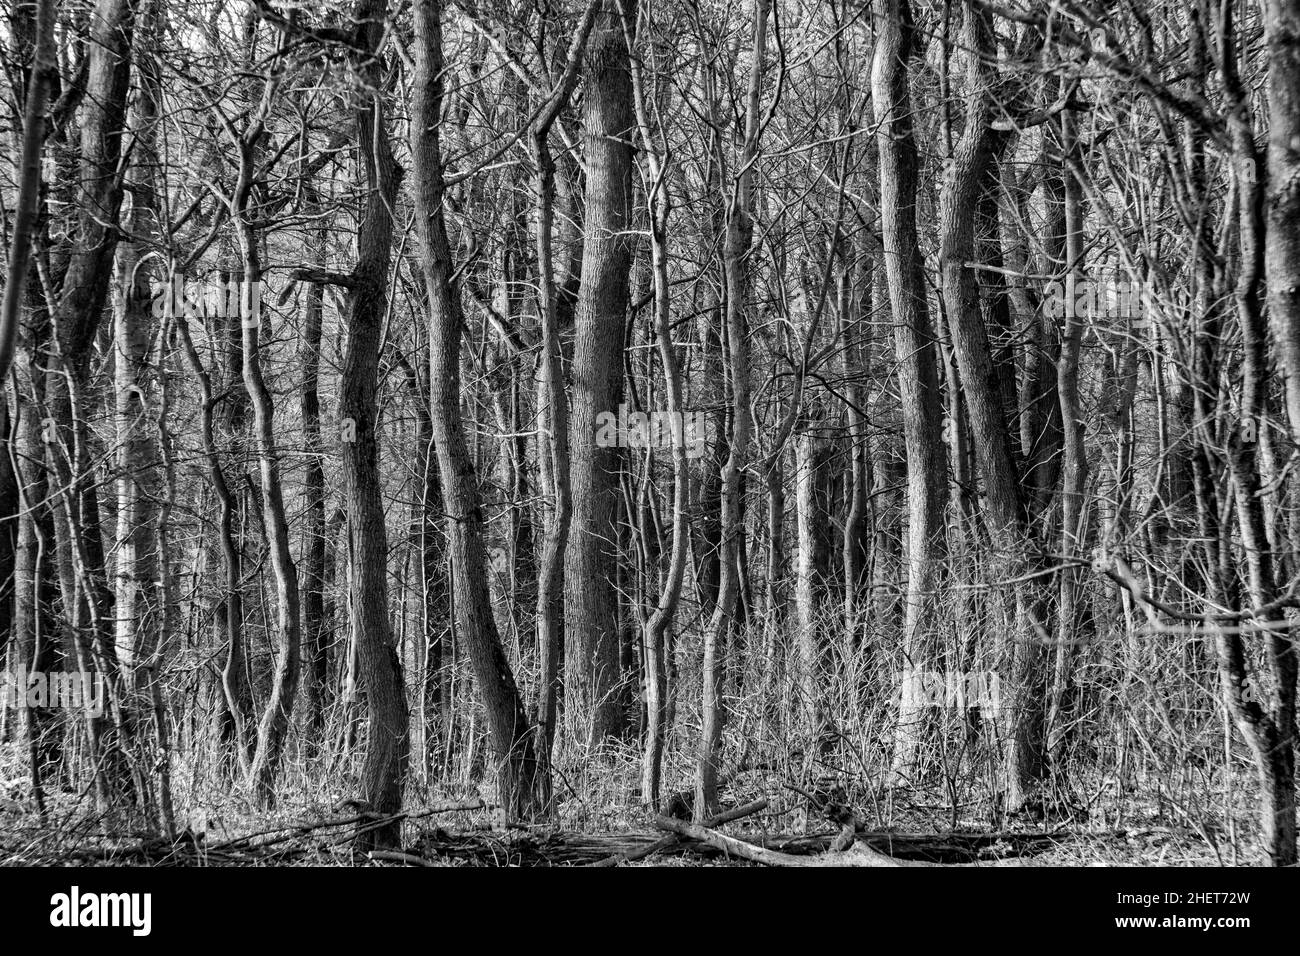 detail of forest in Vienna, the Wienerwald forest Stock Photo